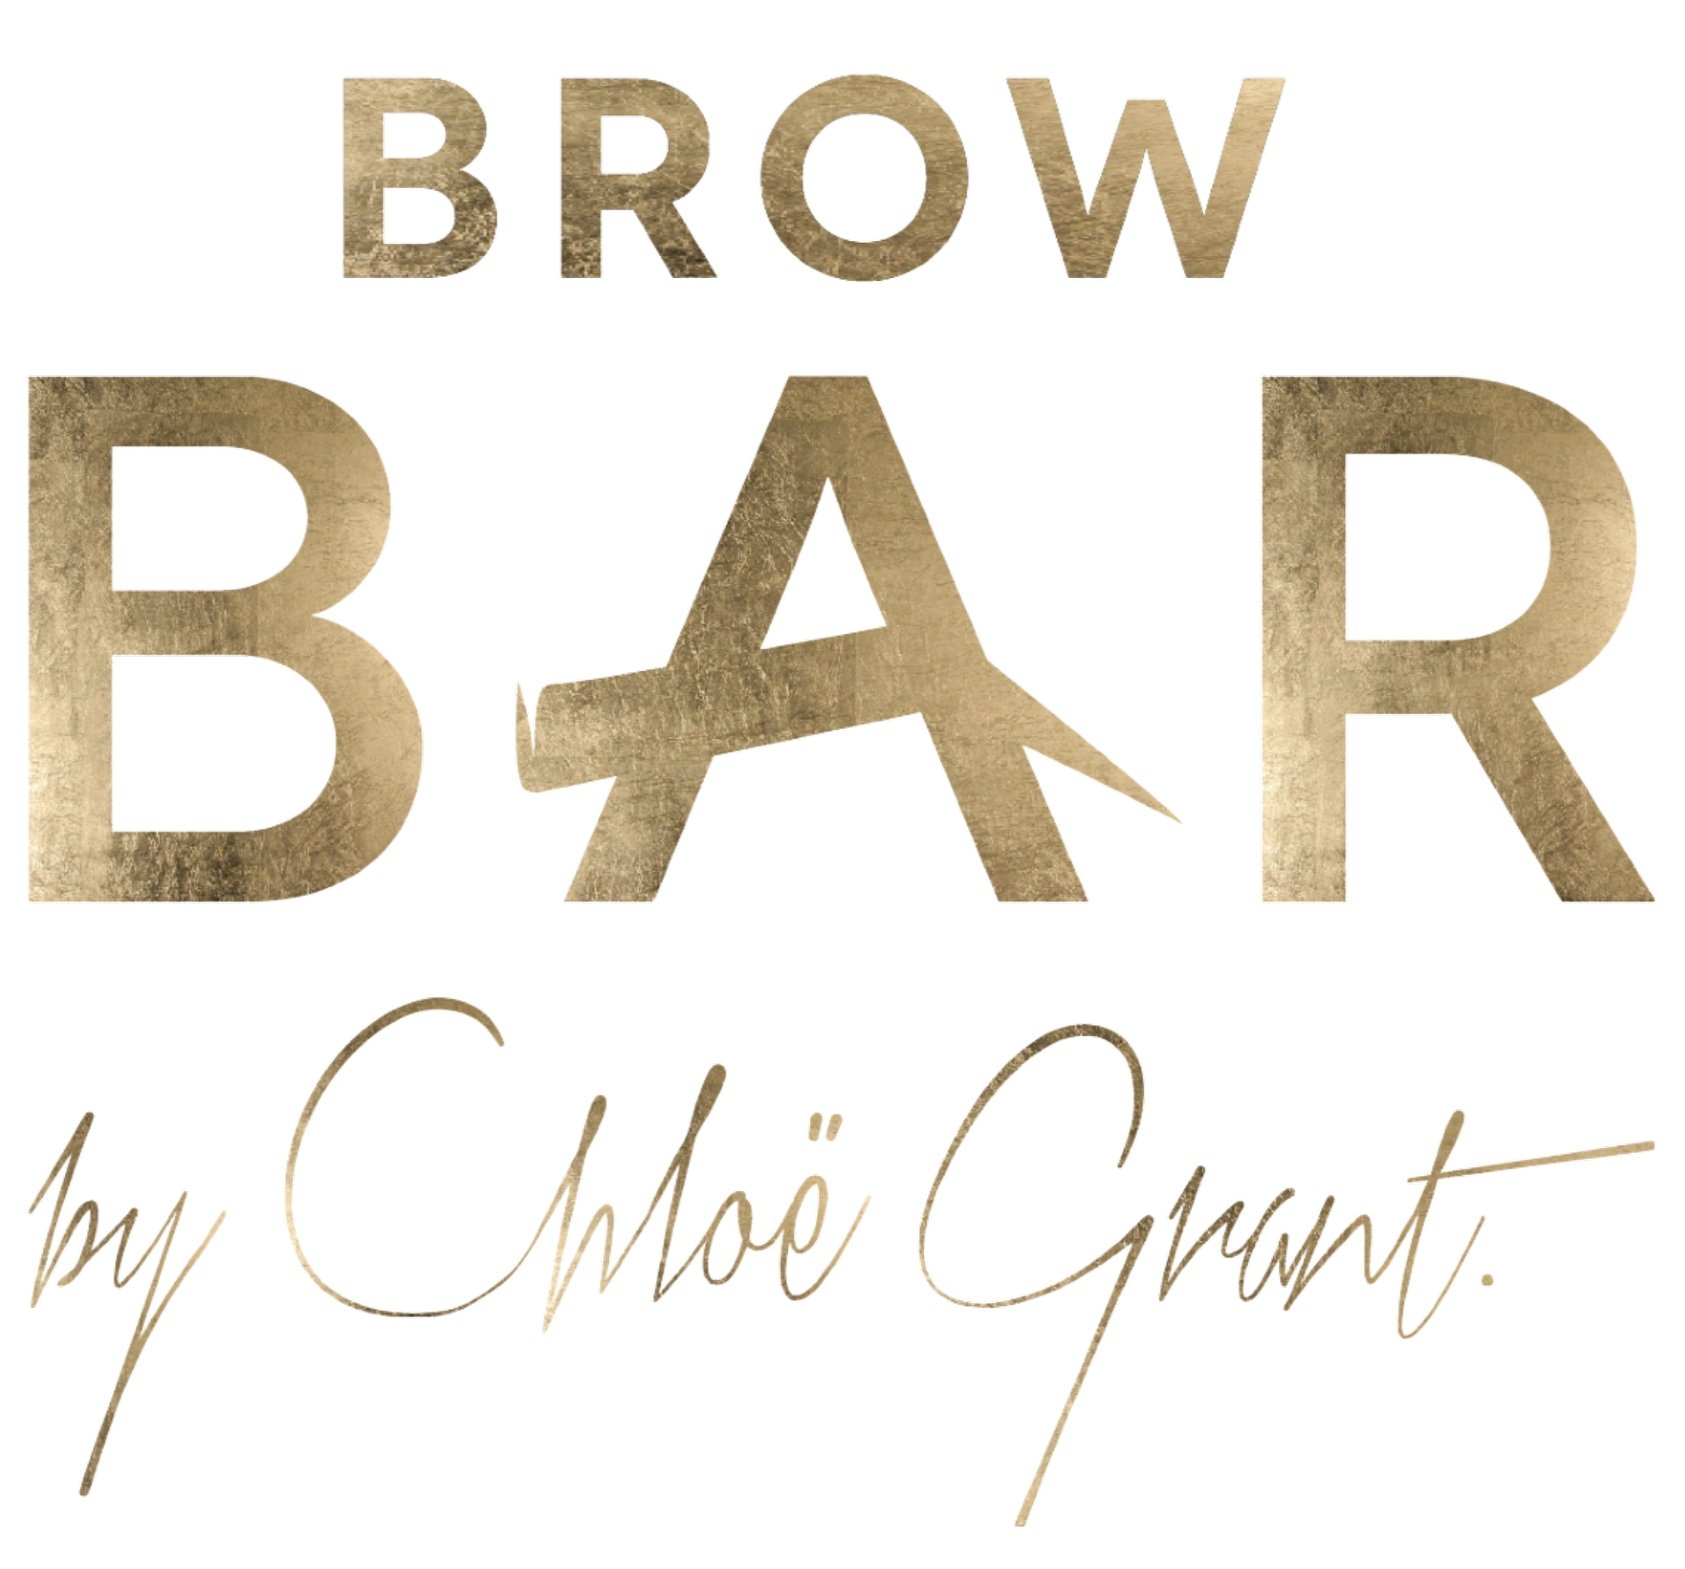 Brow Bar Brugge by Chloë Grant